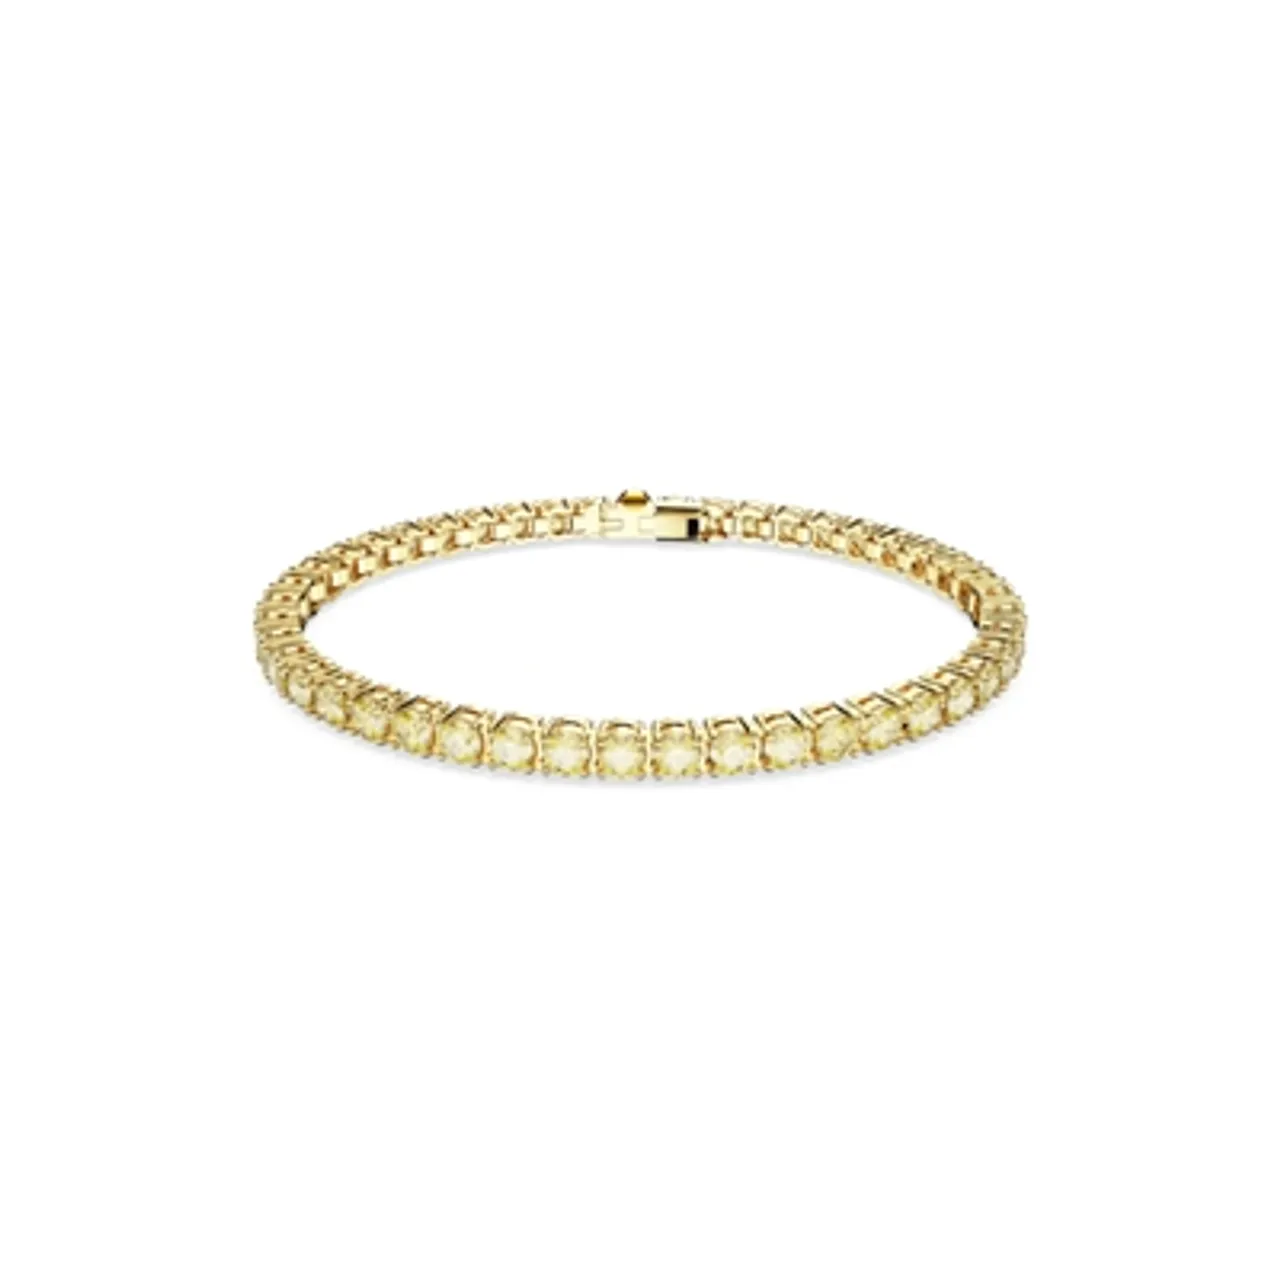 Swarovski Matrix Gold + Yellow Round Tennis Bracelet - 16.5cm